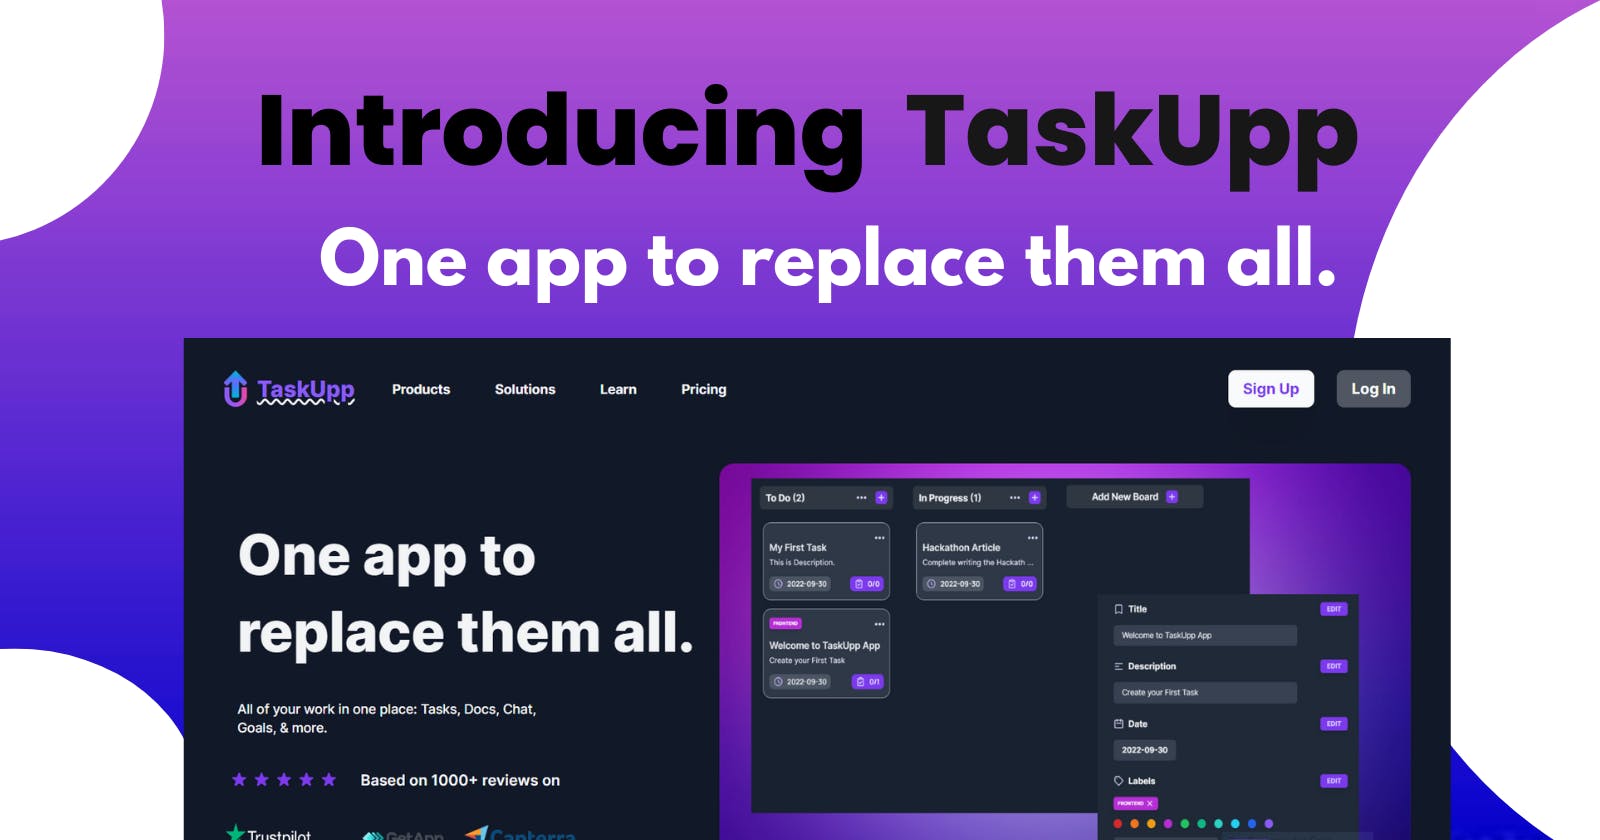 Introducing TaskUpp App - Task Management made easy.